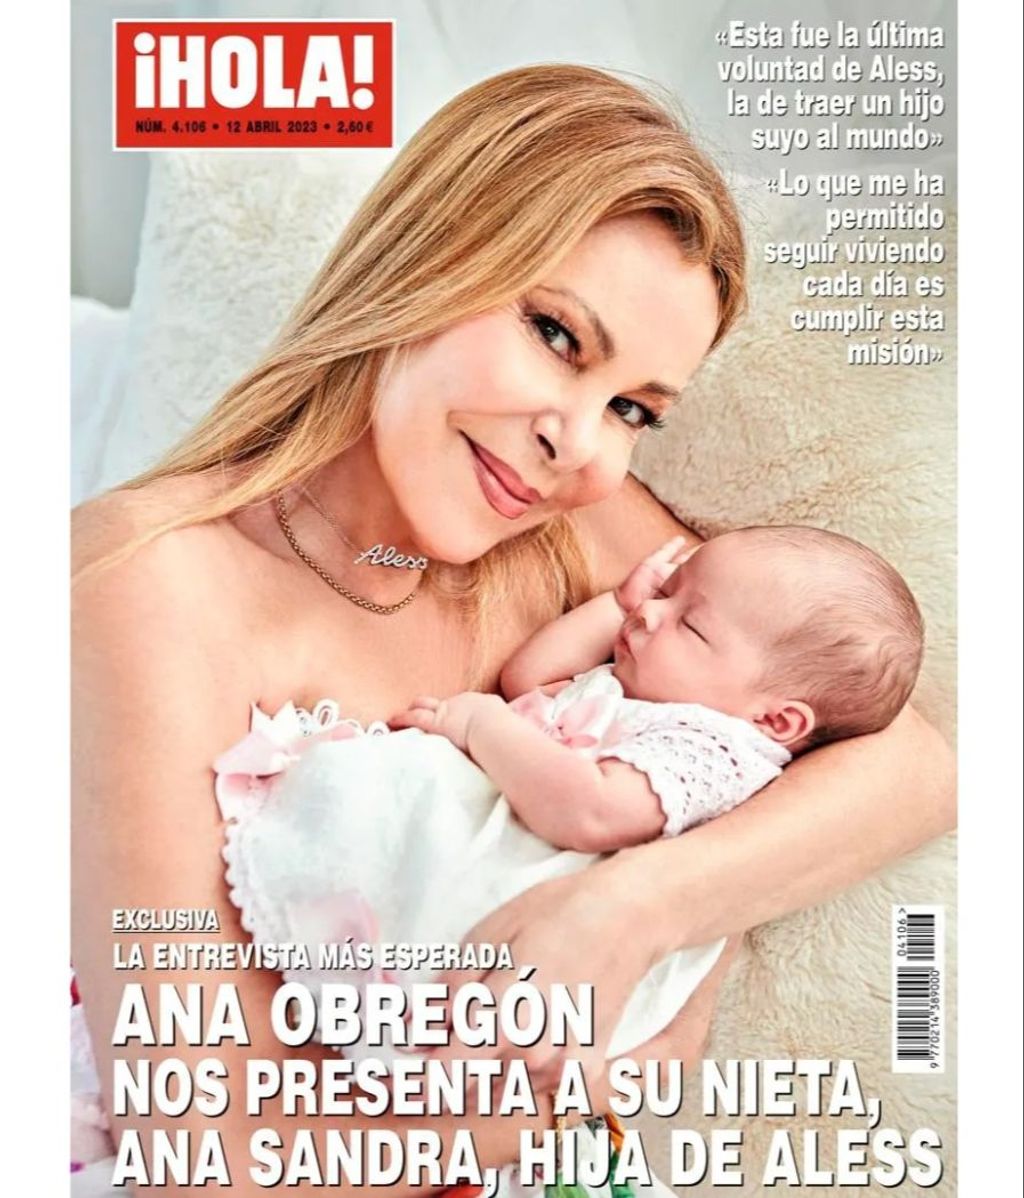 Exclusiva de '¡Hola!', Ana Obregón presenta a su nieta Ana Sandra